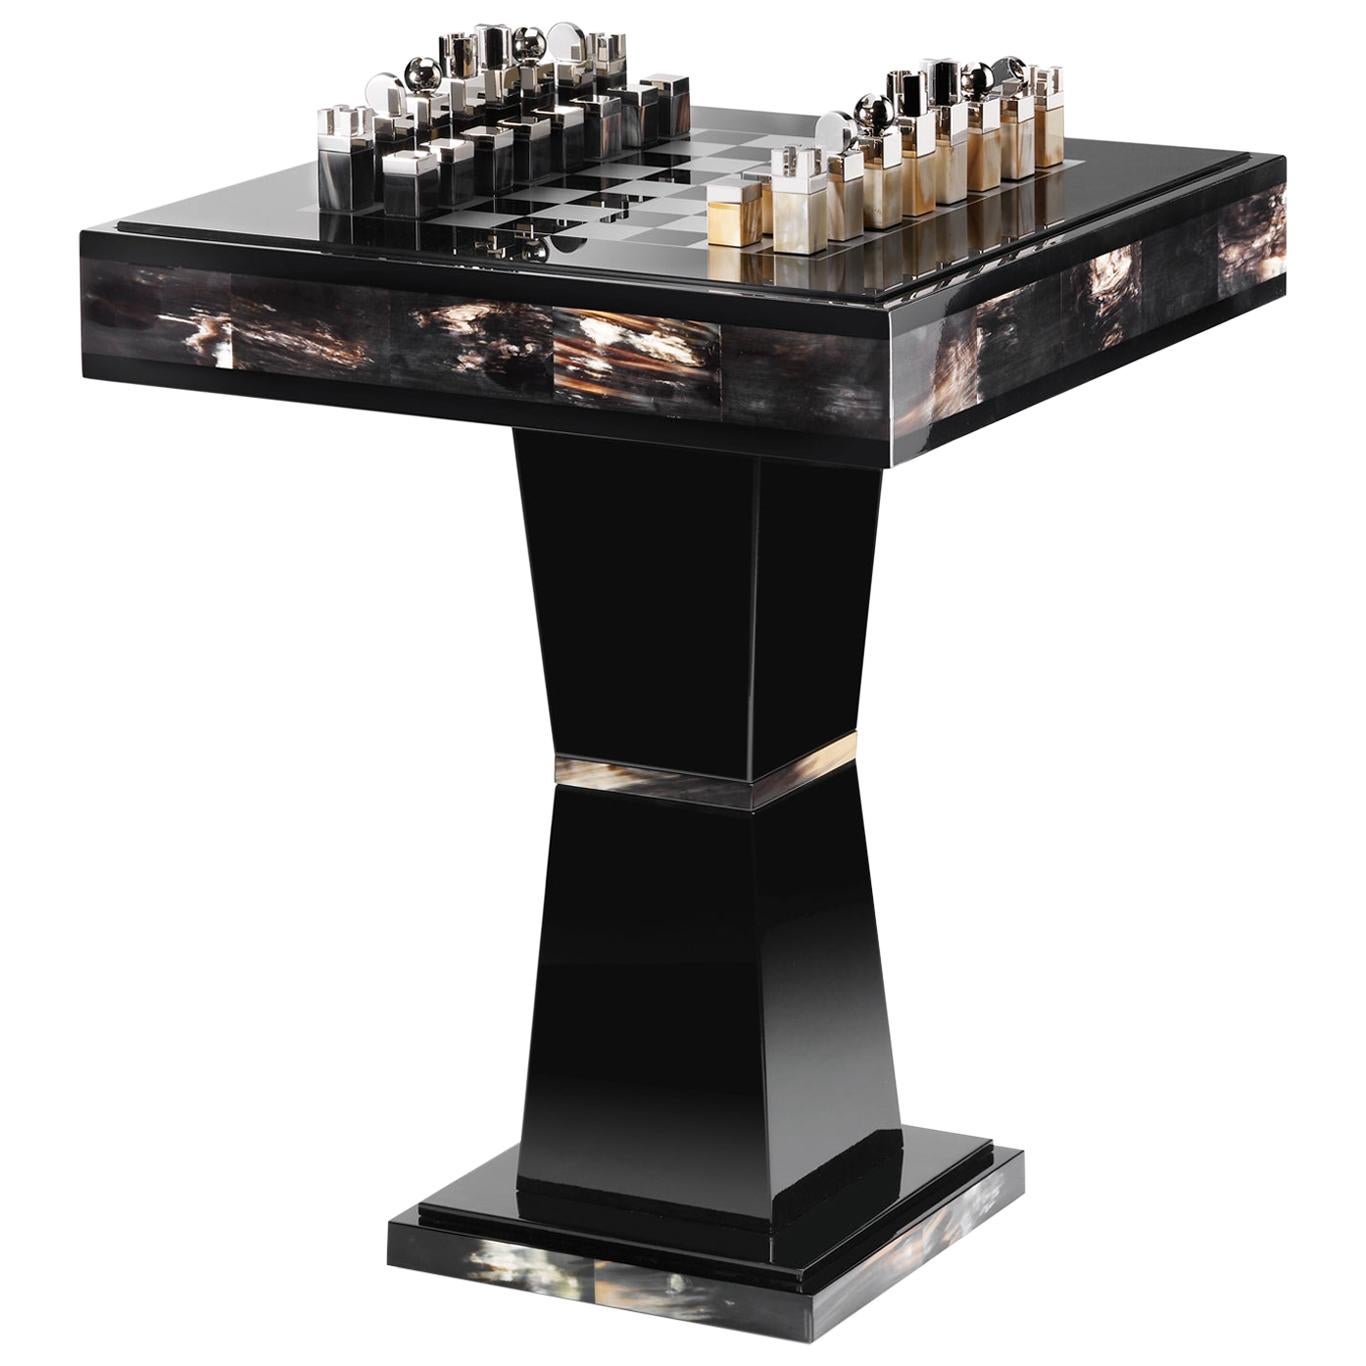 Alfio Chess Table in Corno Italiano and Glossy Black Lacquered Wood, Mod. 3244